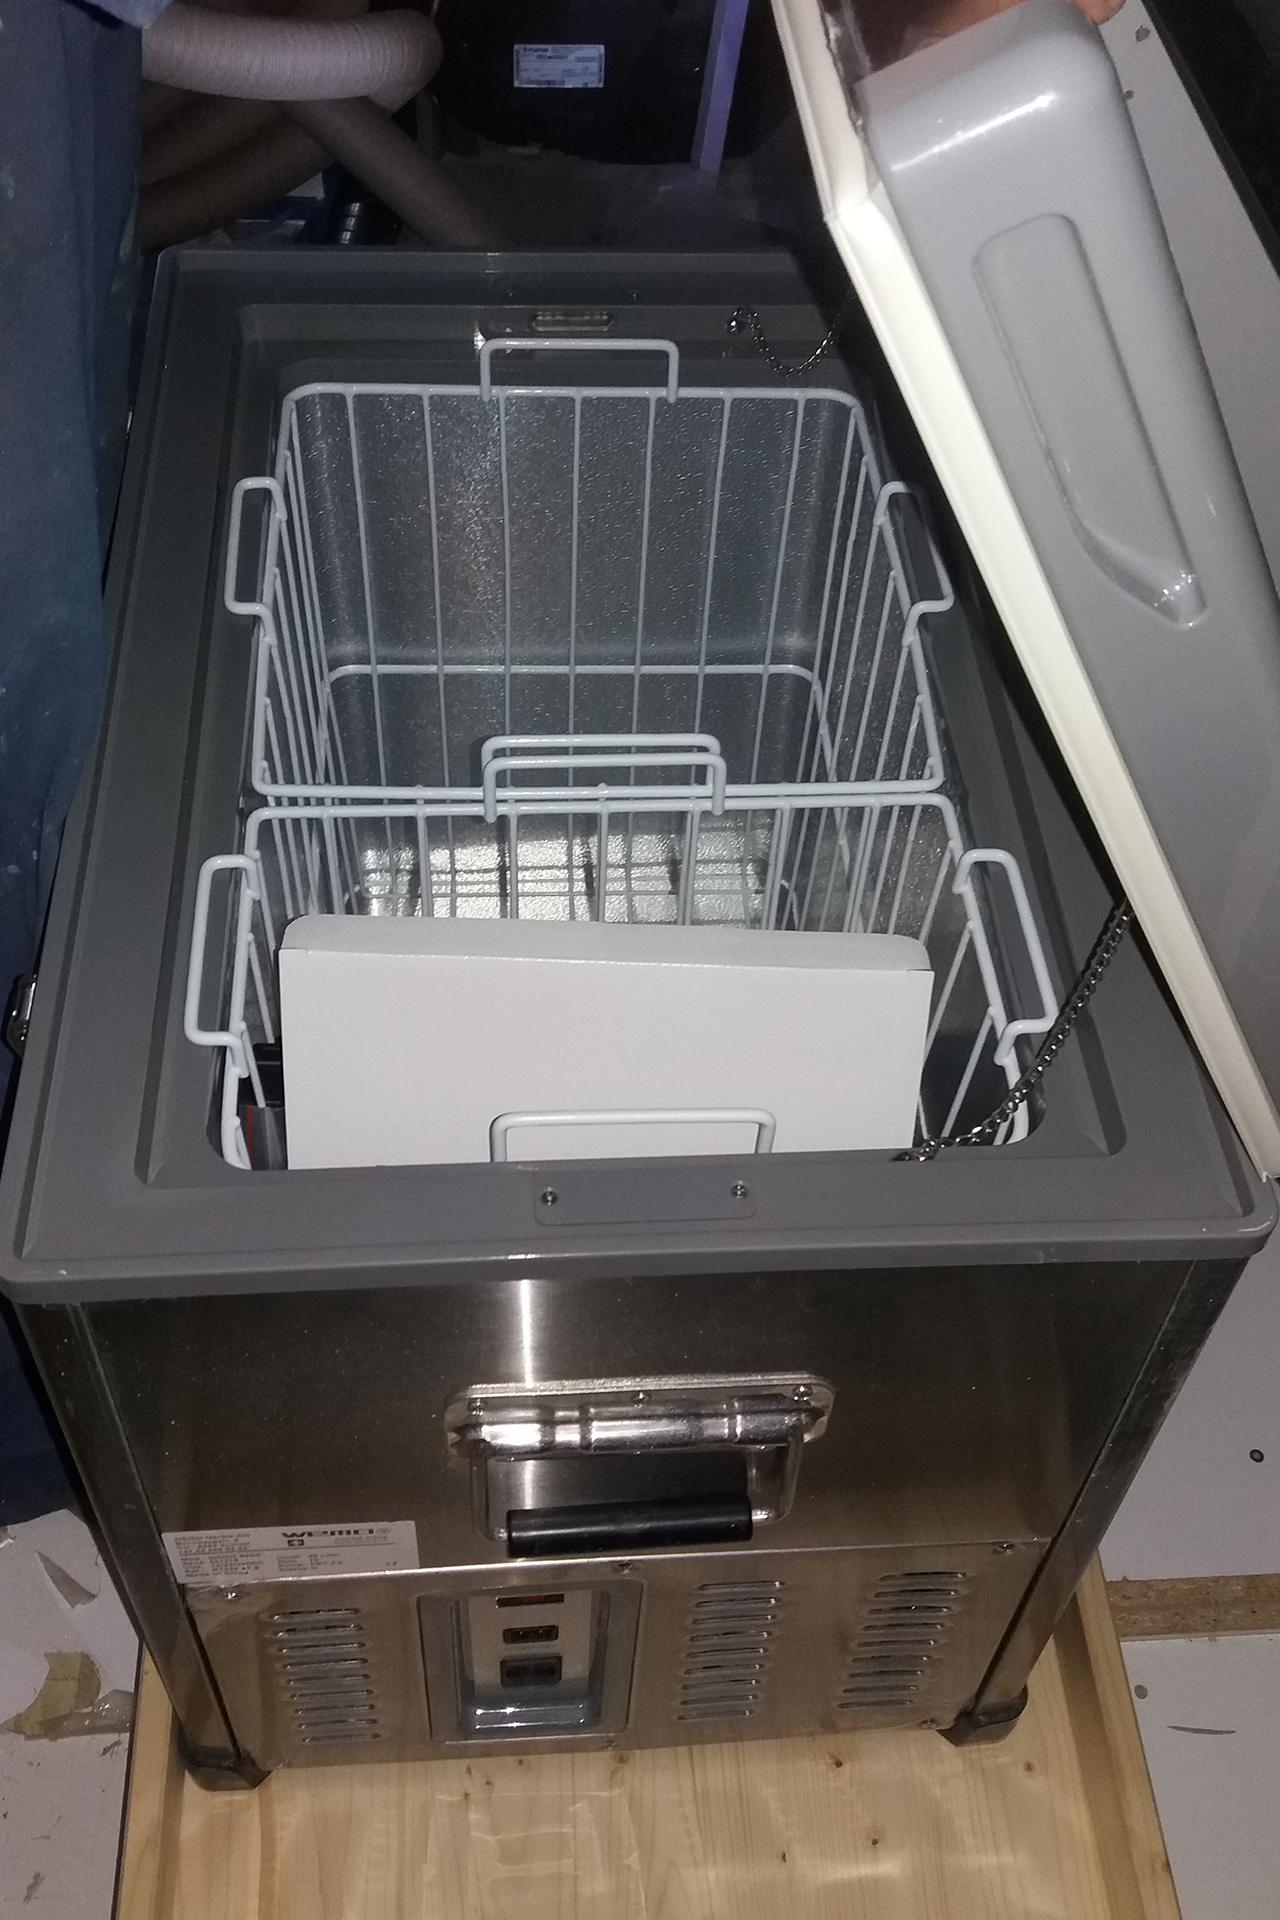 Offne Kühlboxs aufauziehbarer Schublade